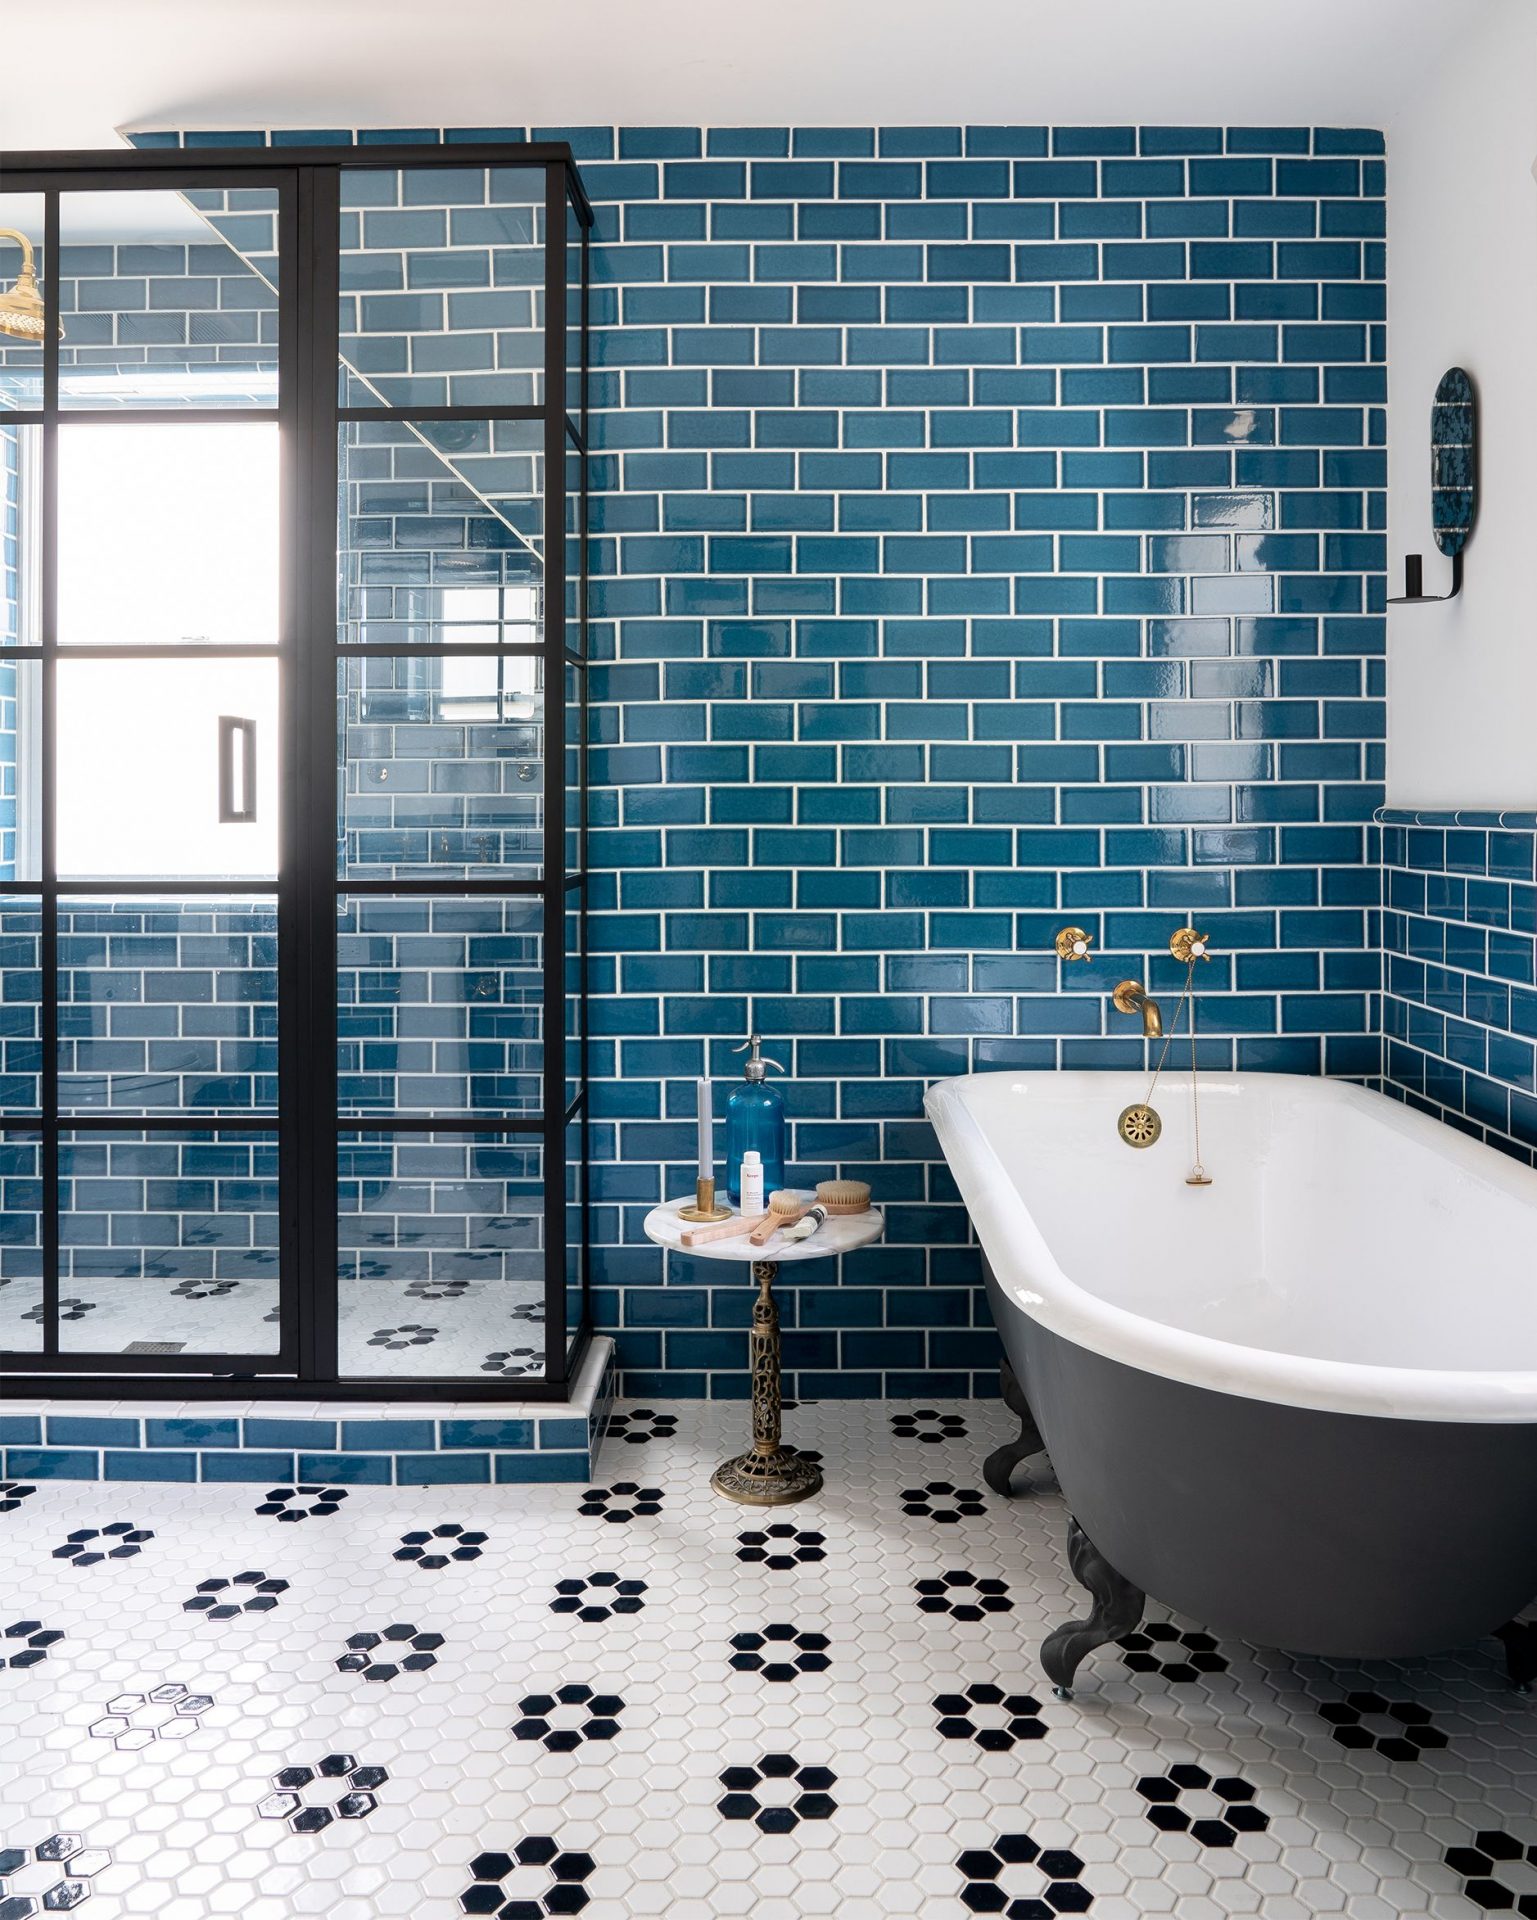 Bathroom Tiles Design: